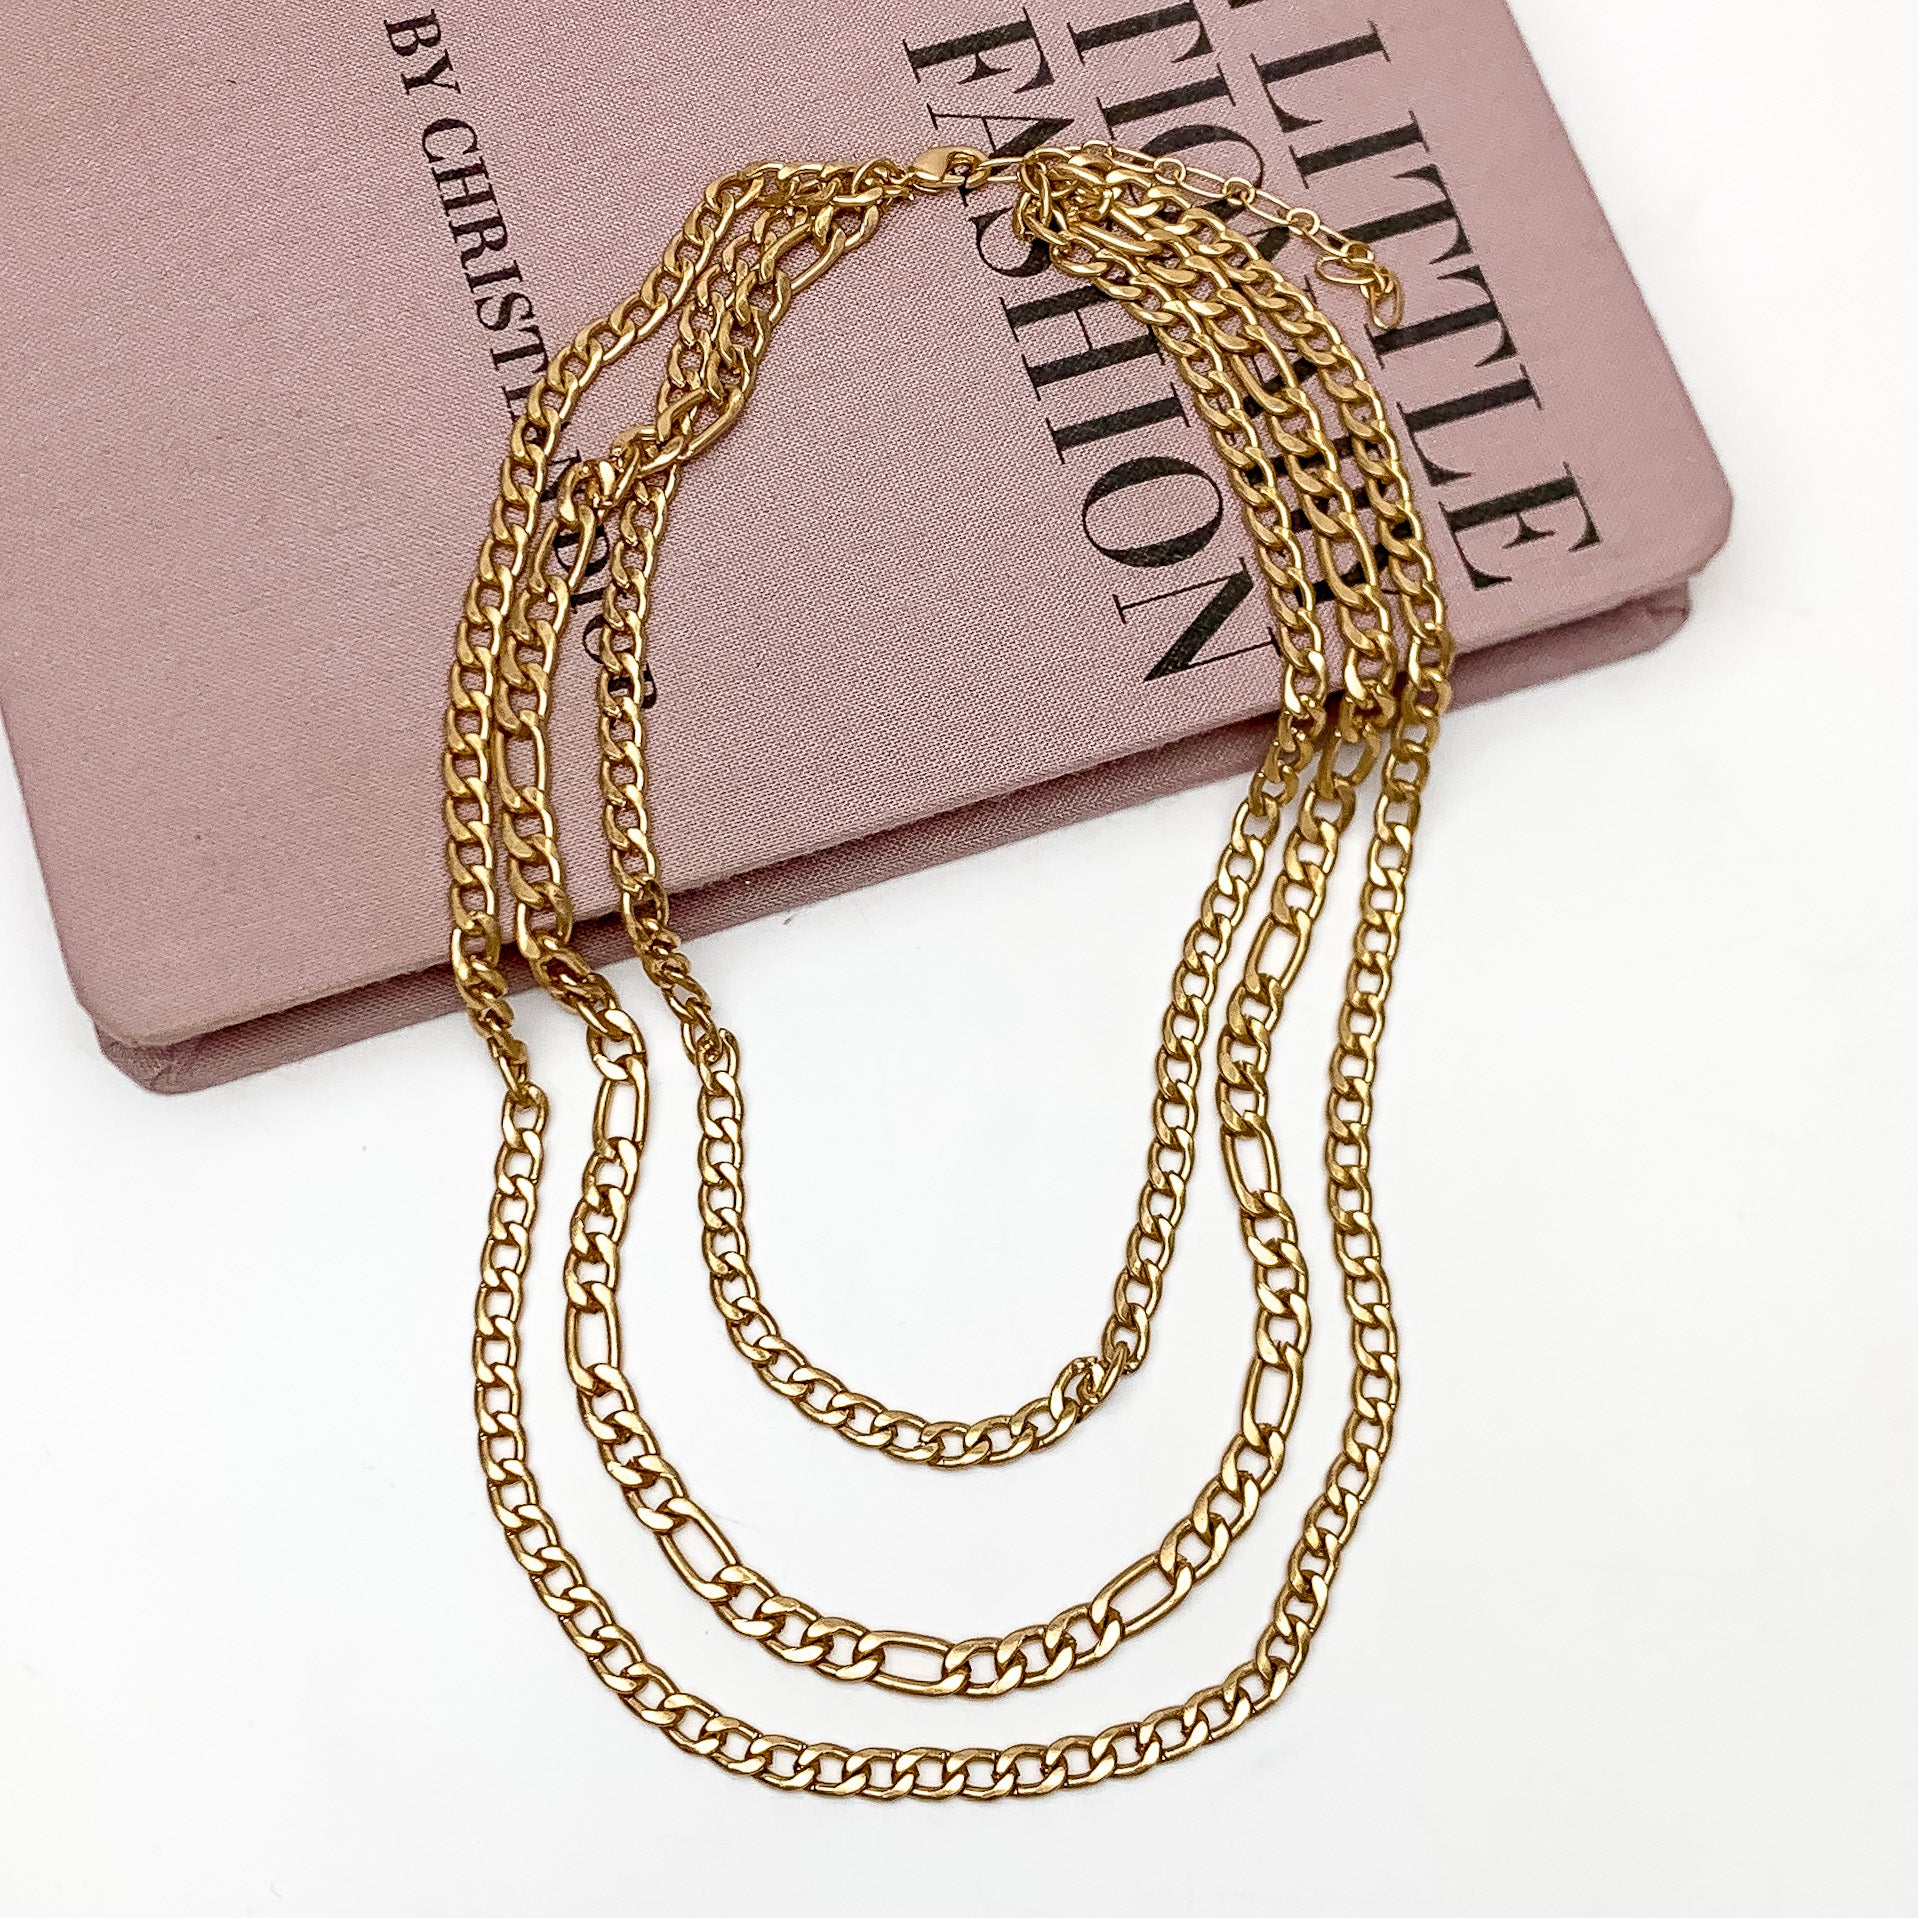 Multi Strand Curb Chain Necklace in Gold Tone